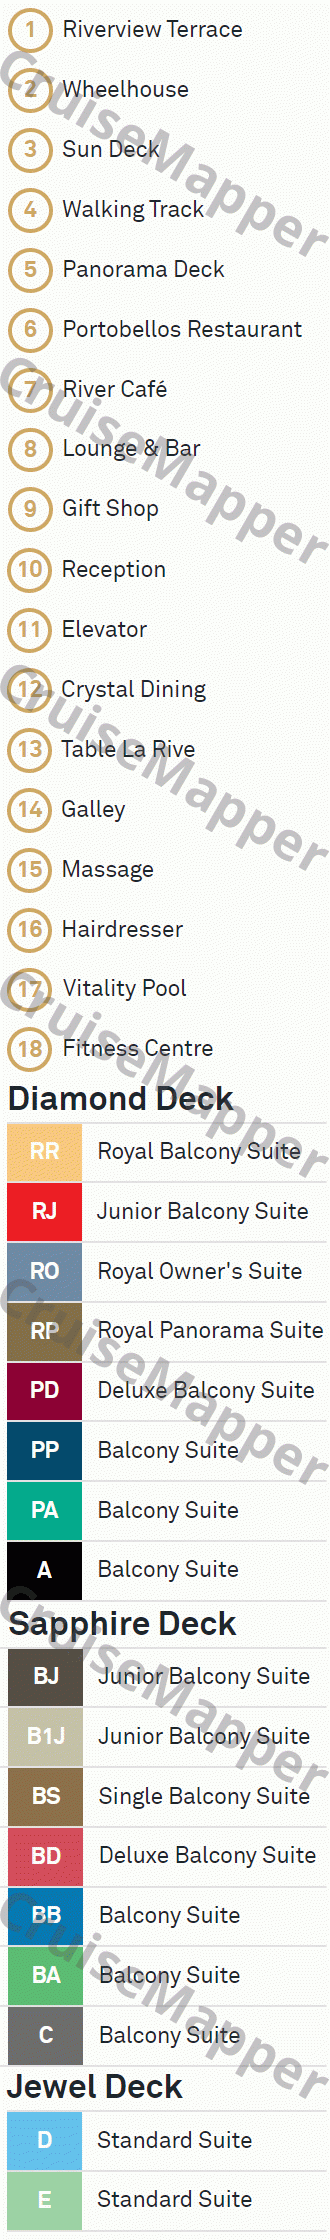 Scenic Jasper deck 3 plan (Diamond-Lobby-Lounge) legend